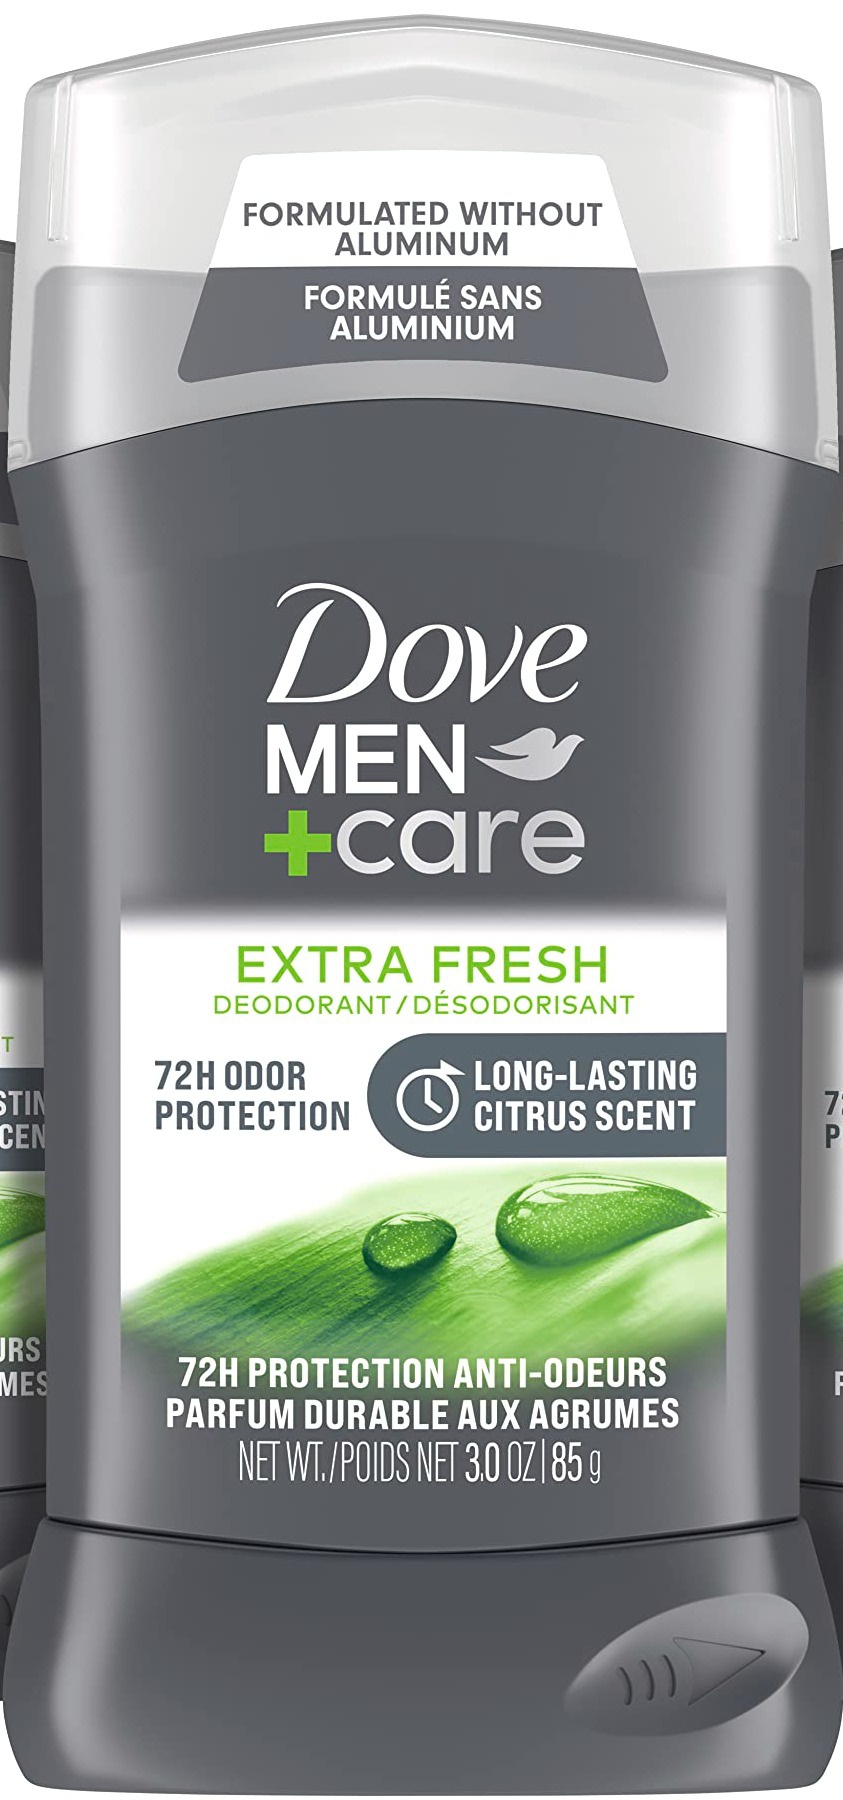 Dove Men+care Deodorant Stick For Men Extra Fresh 4 Count Aluminum Free 72-hour Odor Protection Mens Deodorant With 1/4 Moisturizing Cream